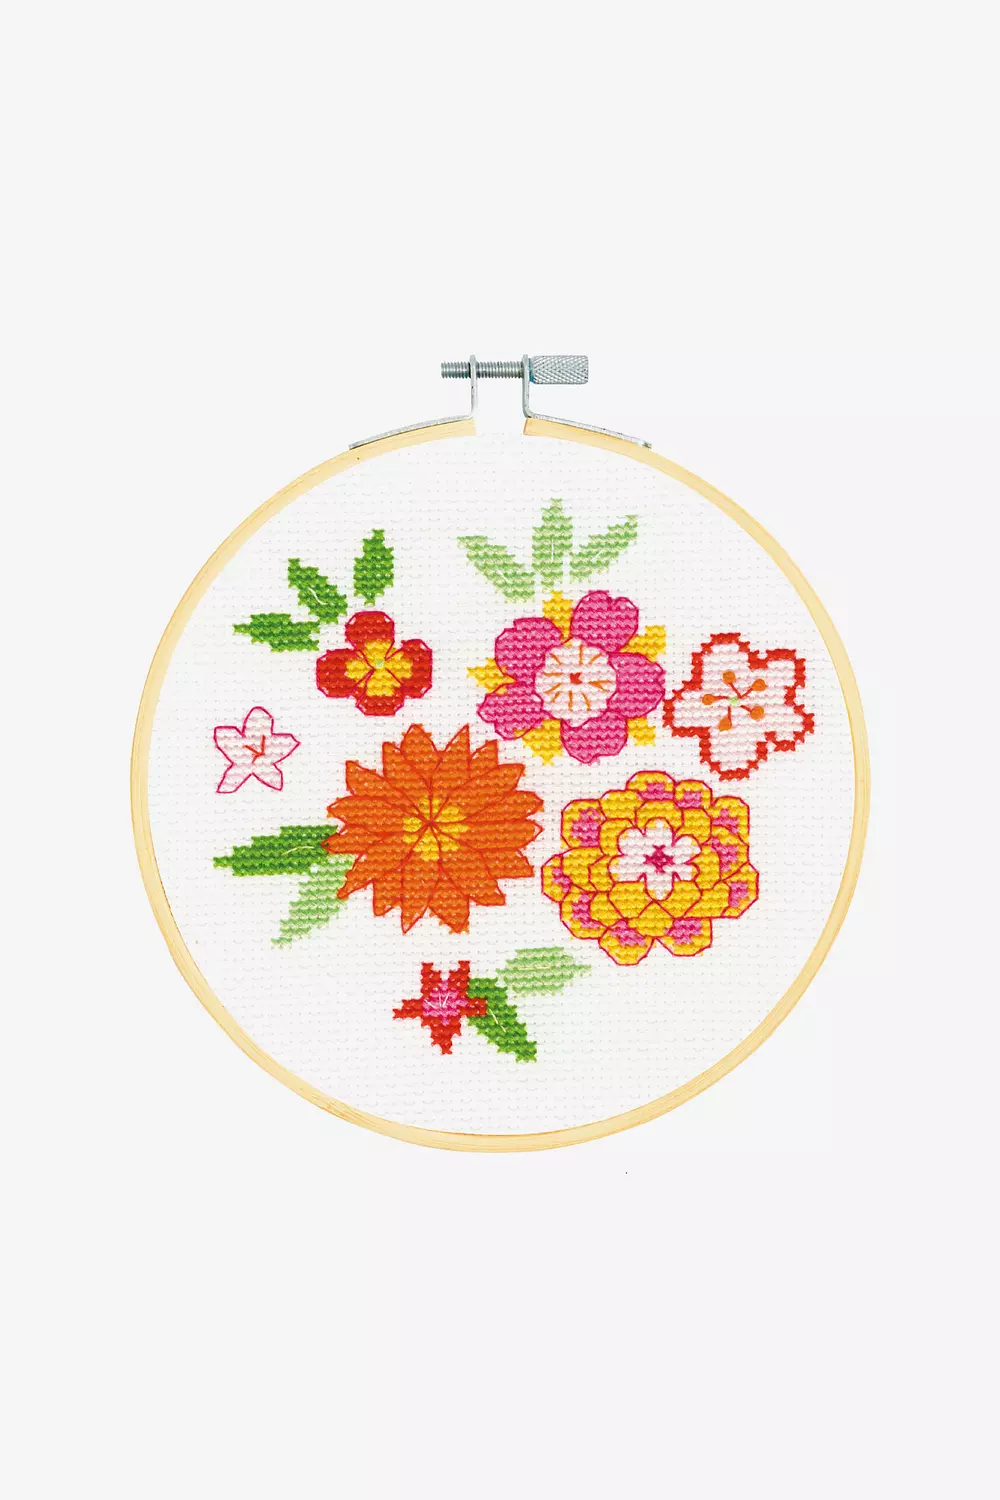 Black Japanese Garden Floral Embroidery Kit